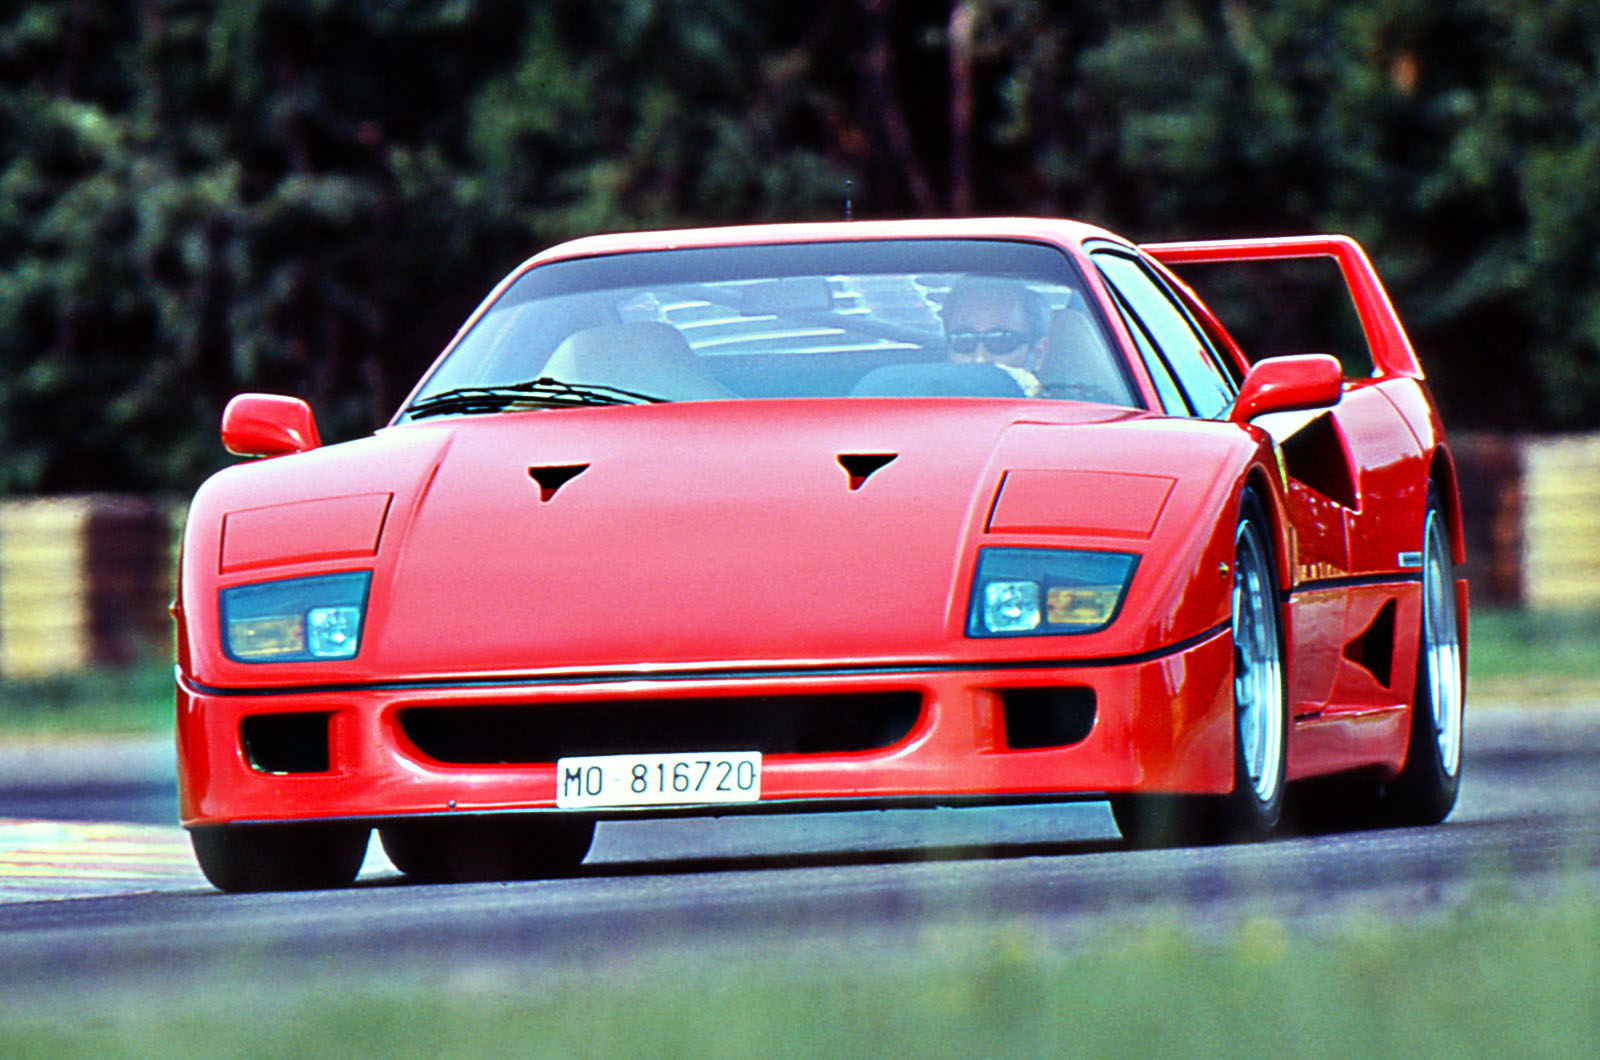 Used Ferrari F40 1987-1992 review